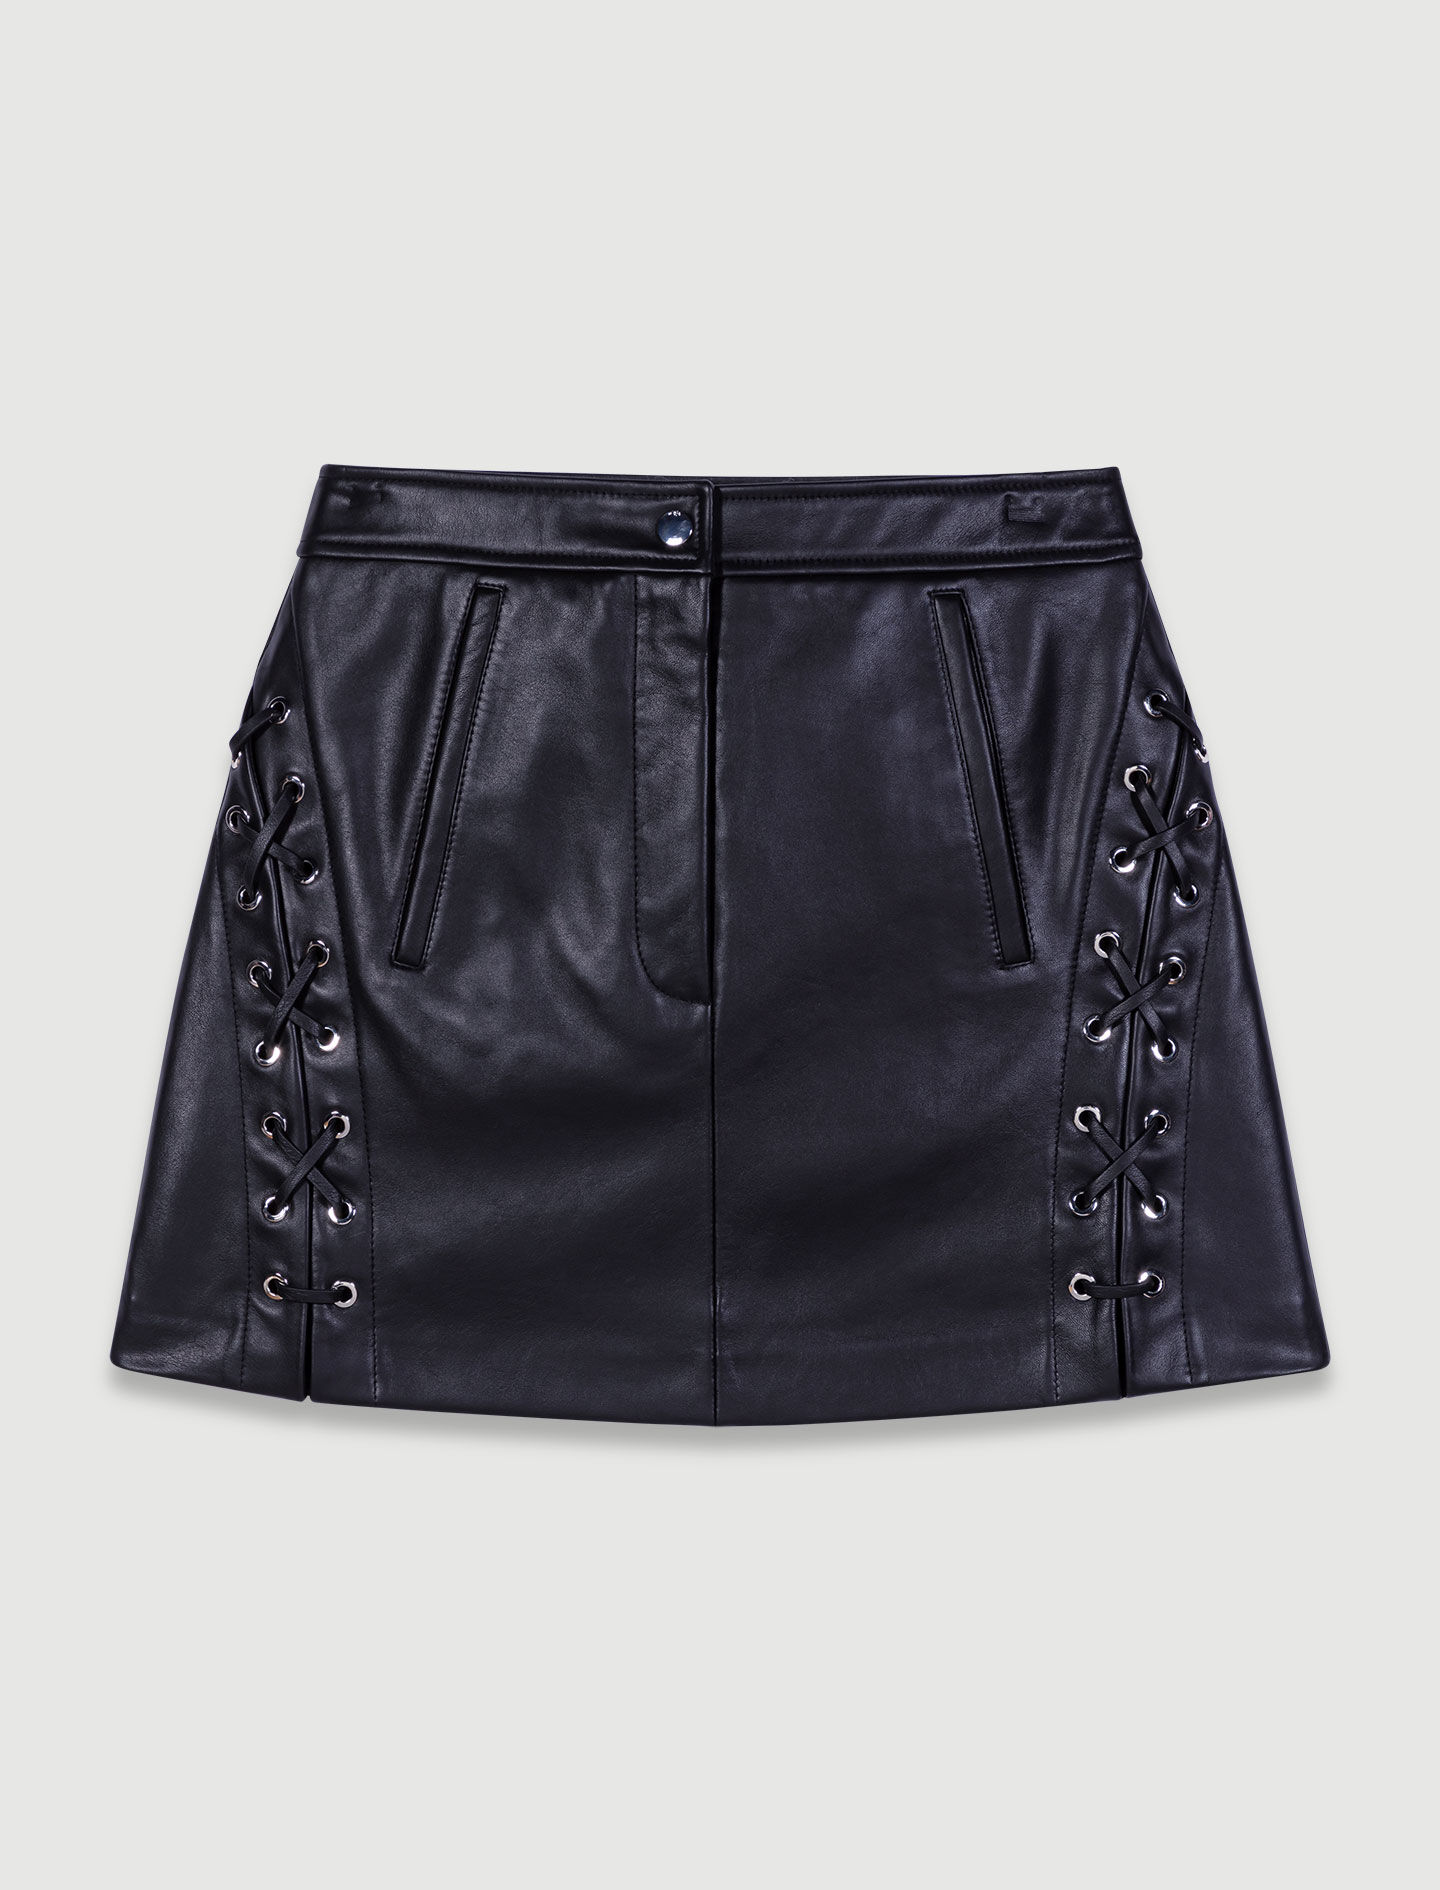 224JILACE Short leather skirt